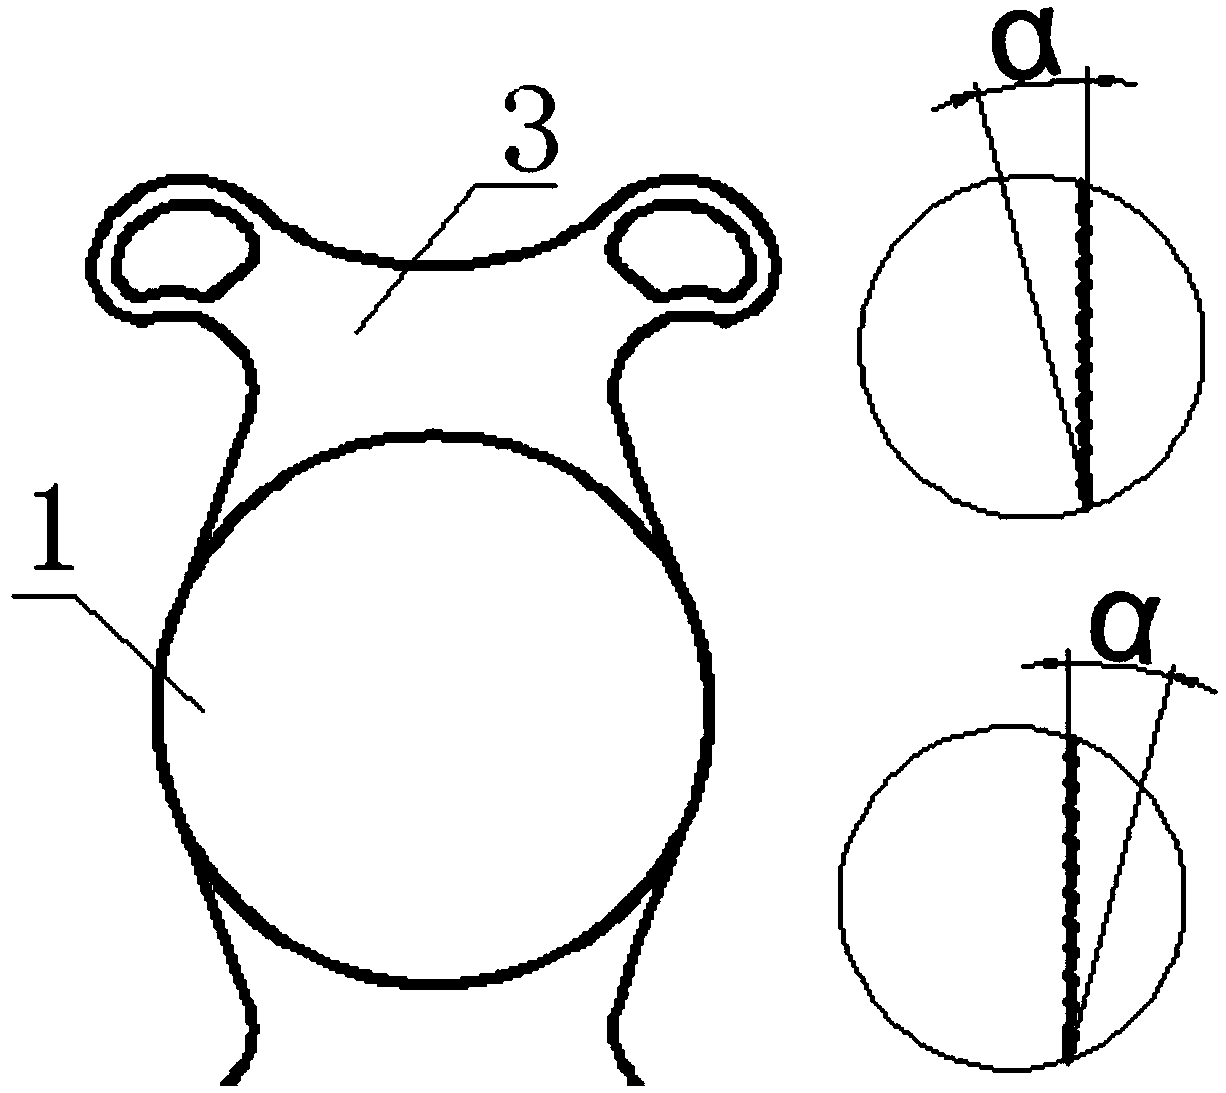 Axial spherical aberration progressive modulation type aspheric intraocular lens